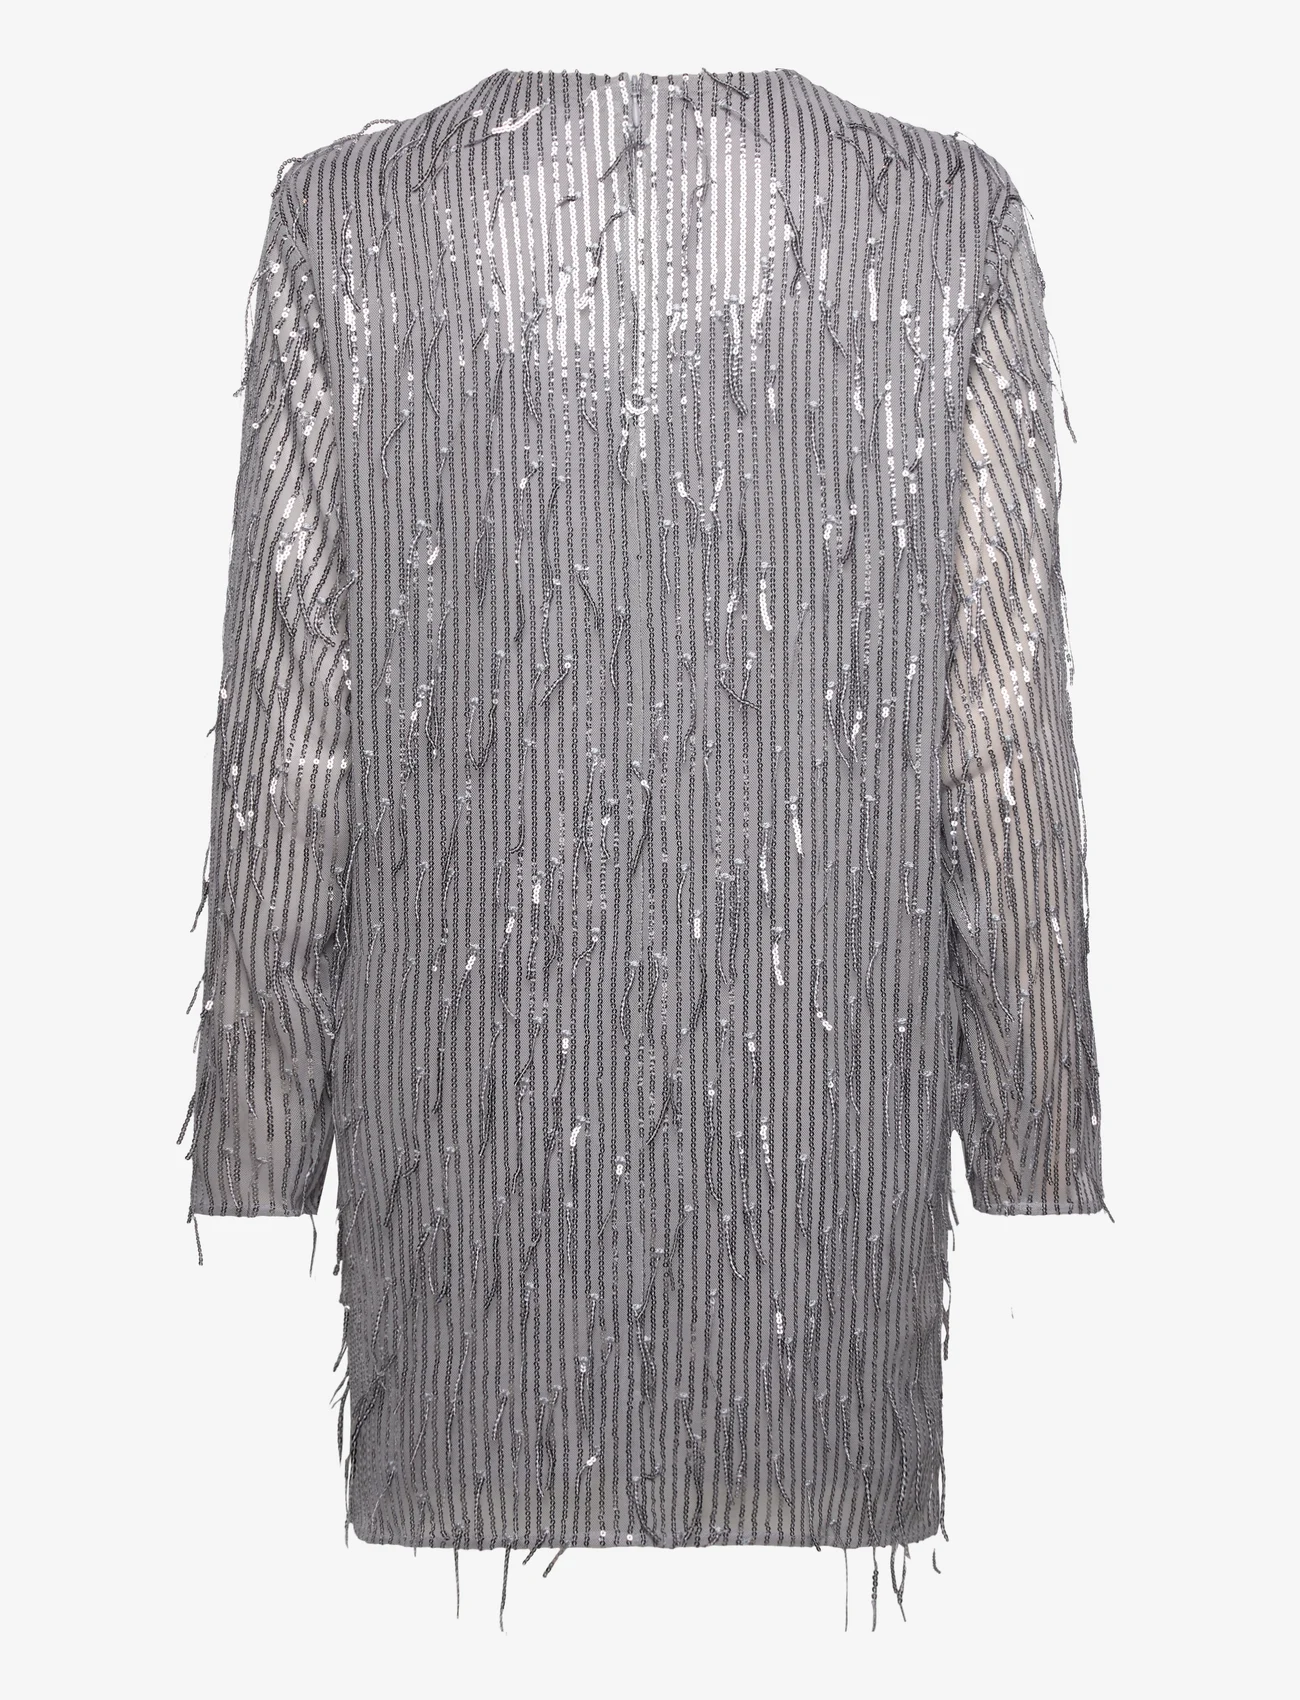 Hosbjerg - Madelin Sequin Dress - ballīšu apģērbs par outlet cenām - silver grey - 1